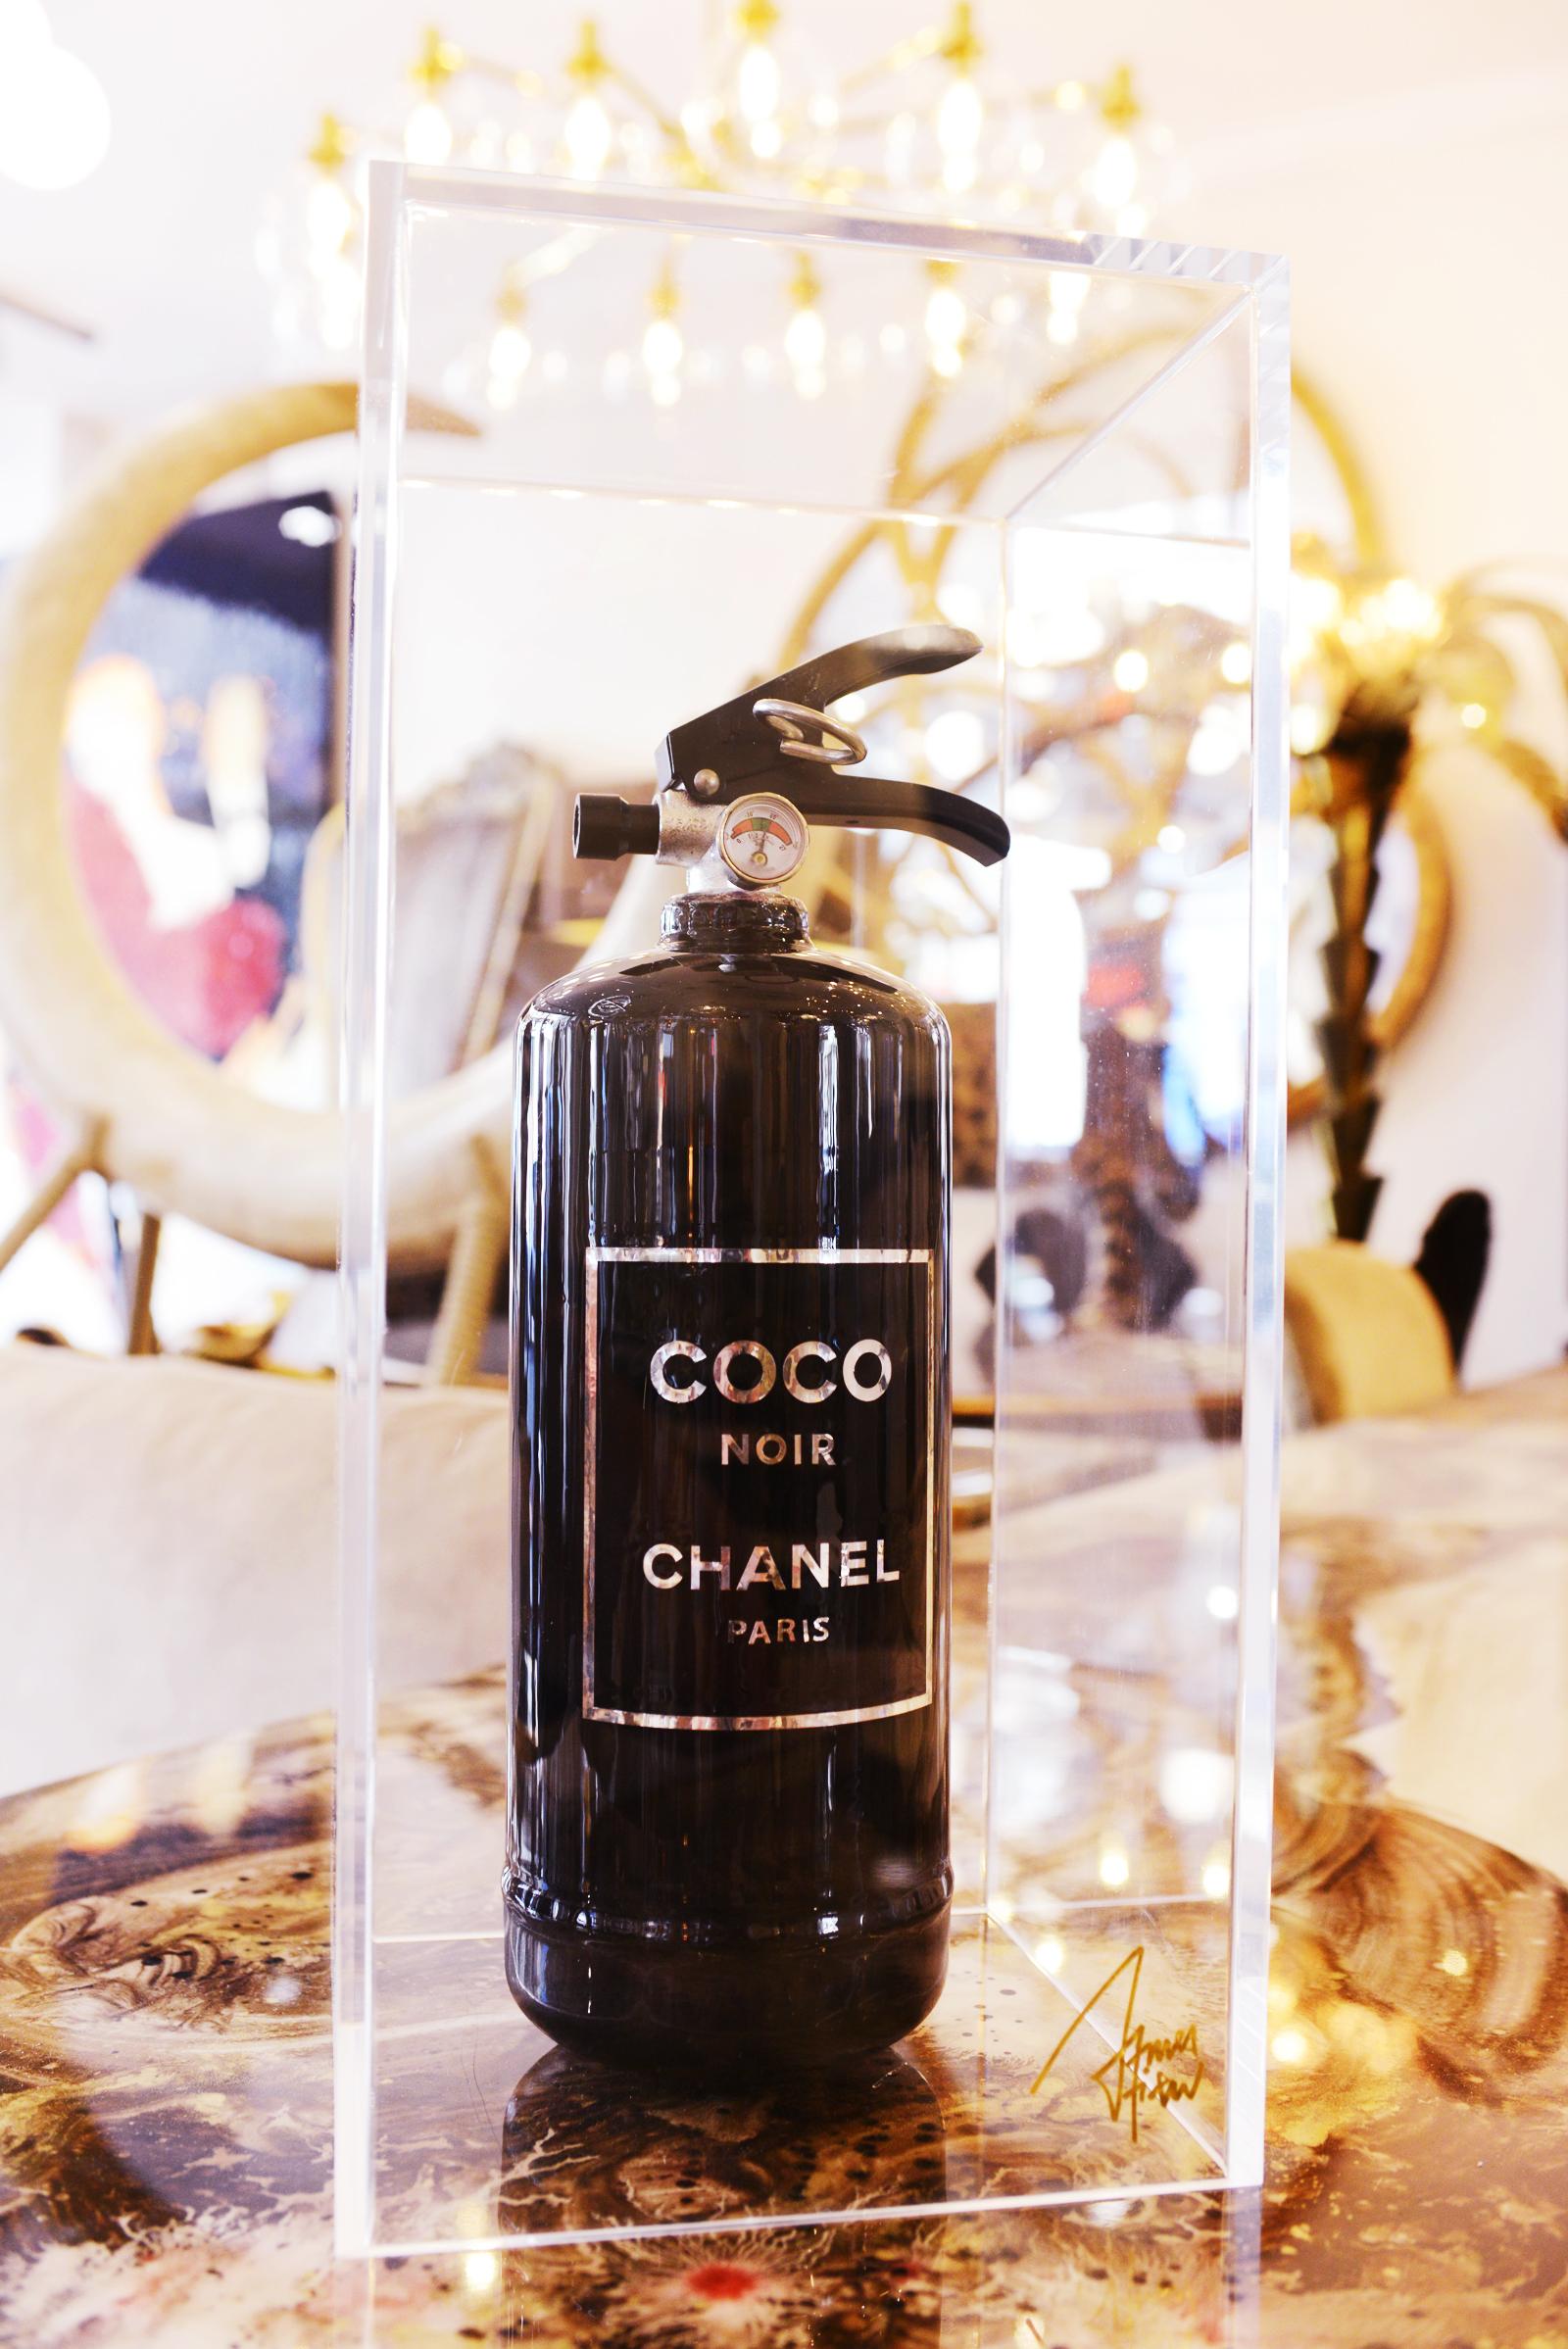 Extinguisher Coco Chanel black under plexiglass box.
Limited edition of 16 pieces.
Measurements:
Box: L 20 x D 20 x H 42.5cm.
Extinguisher: L 10.5 x D 10. 5 x H 35.5cm.